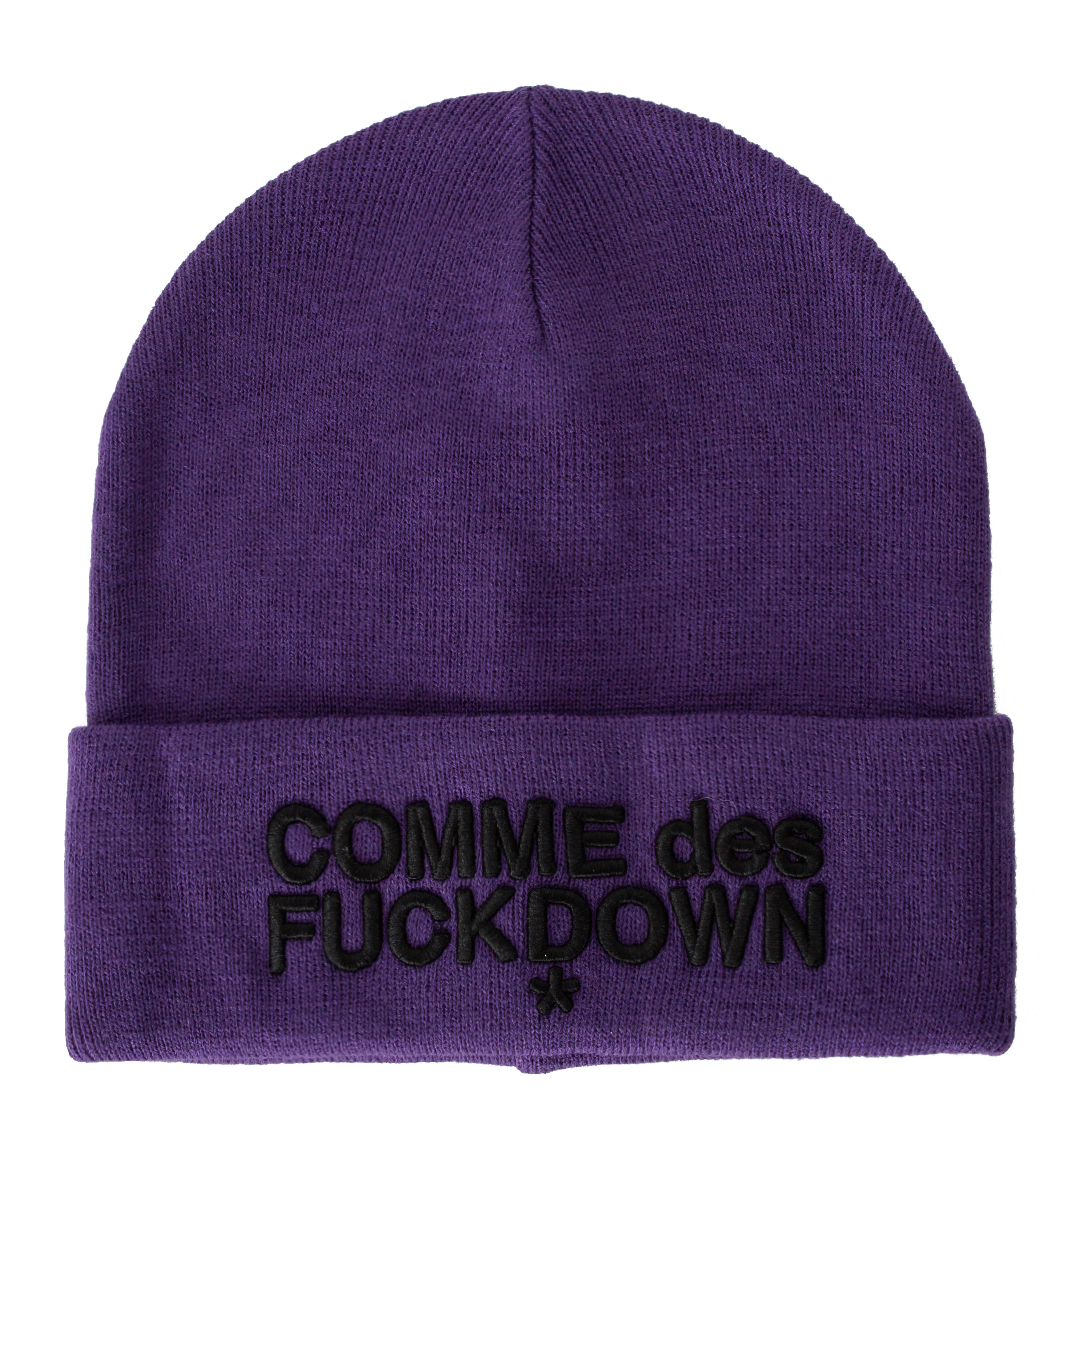 шапка COMME des FUCKDOWN